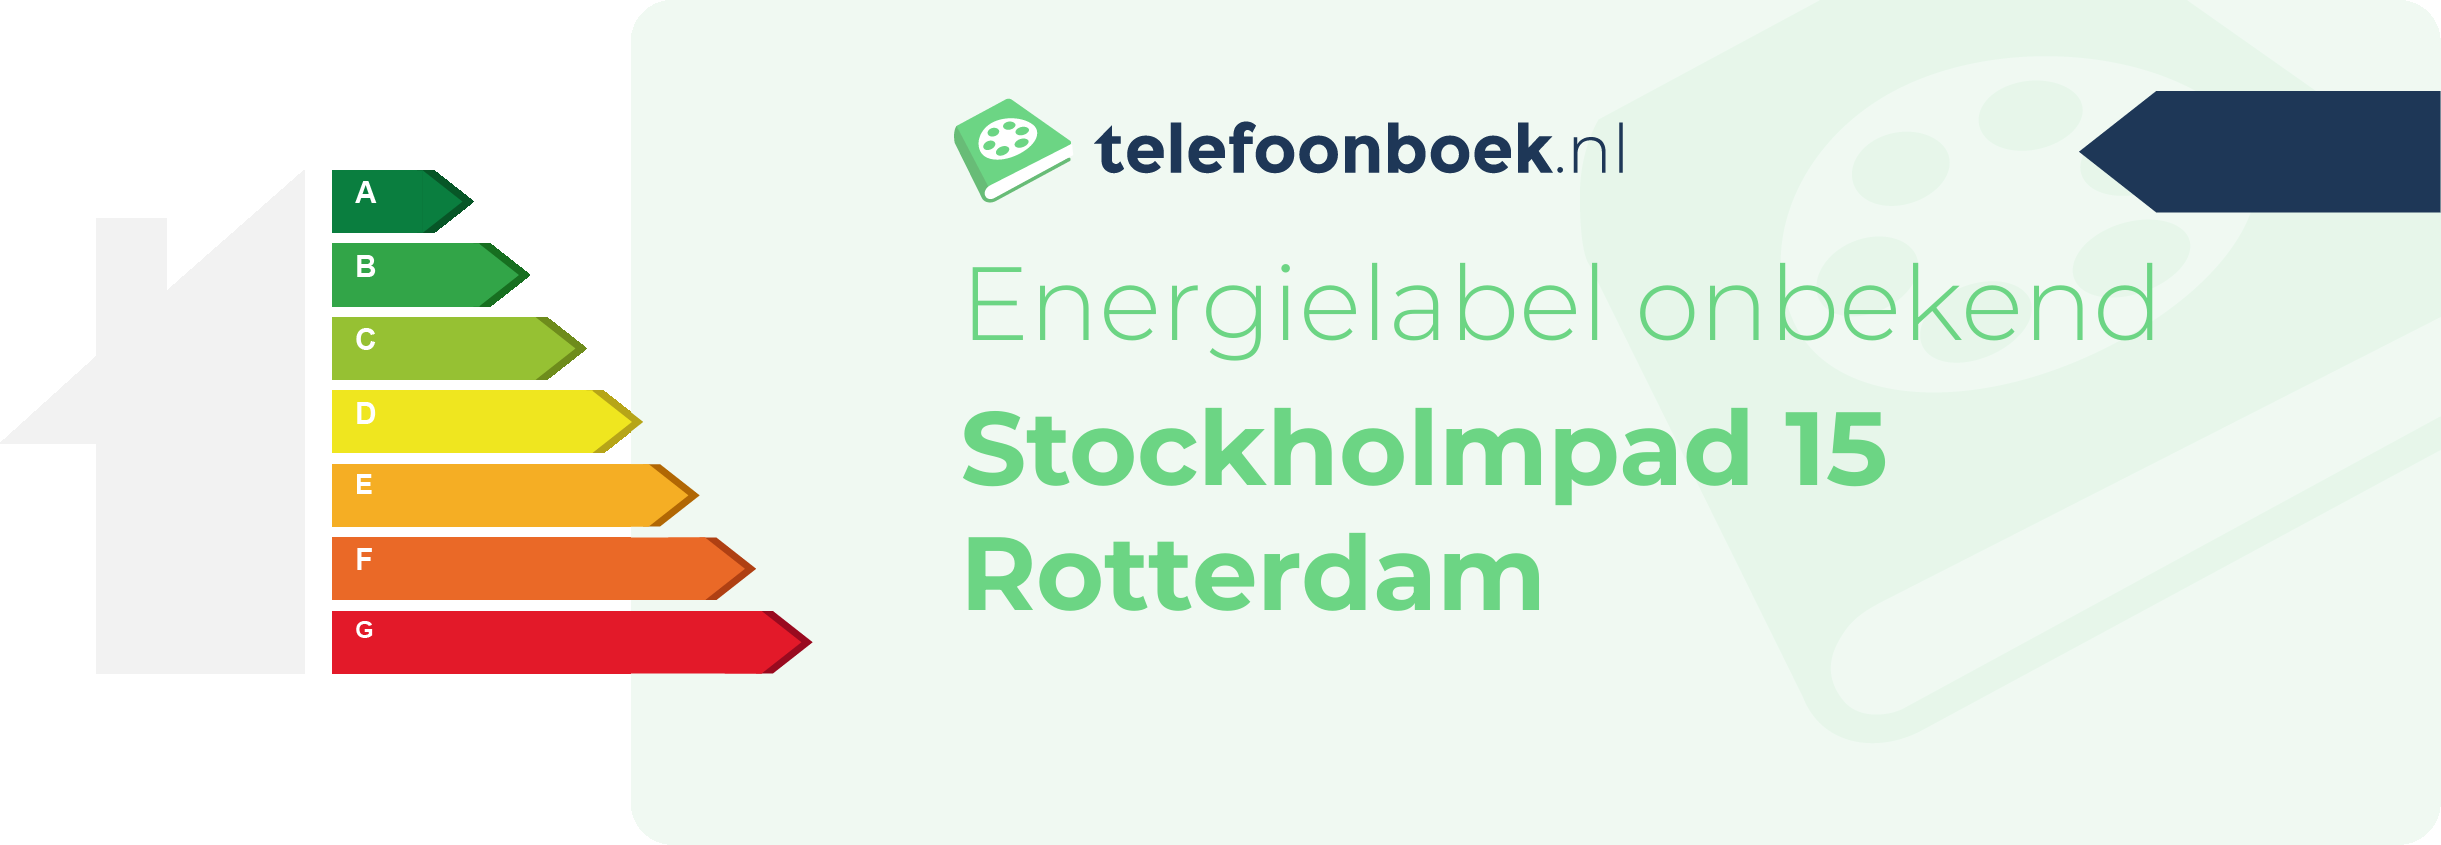 Energielabel Stockholmpad 15 Rotterdam